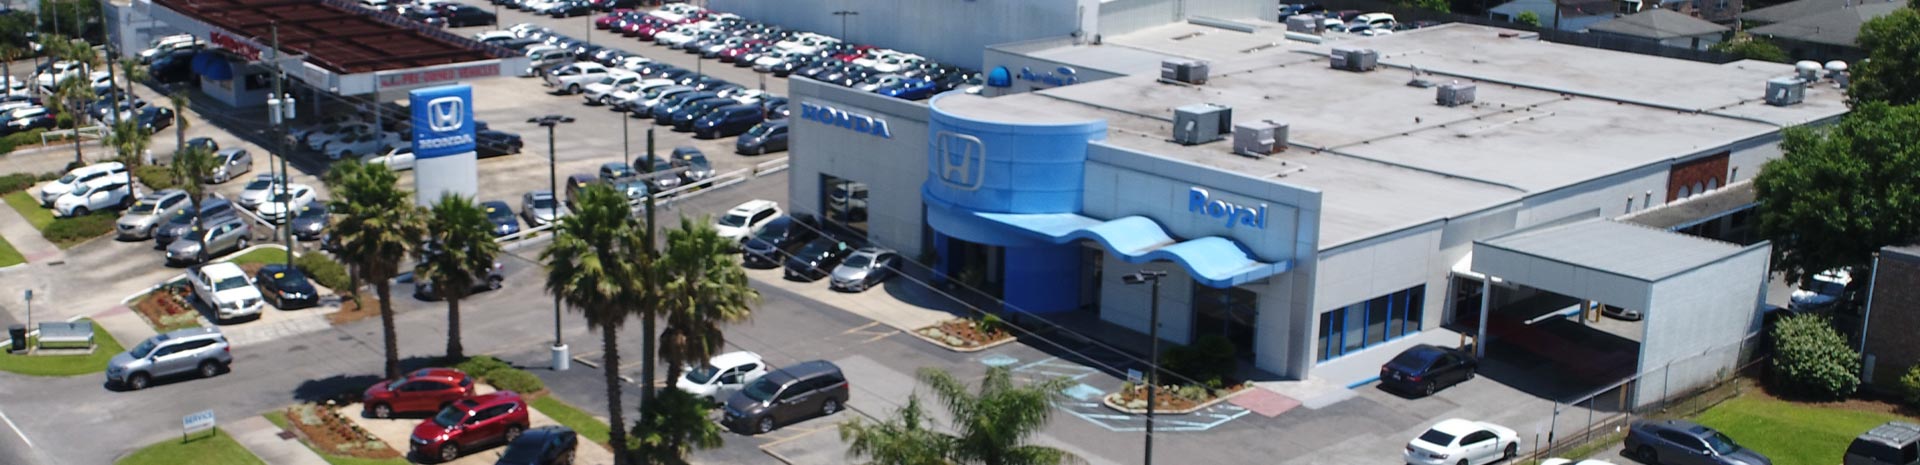 Royal Honda Dealership overhead photo